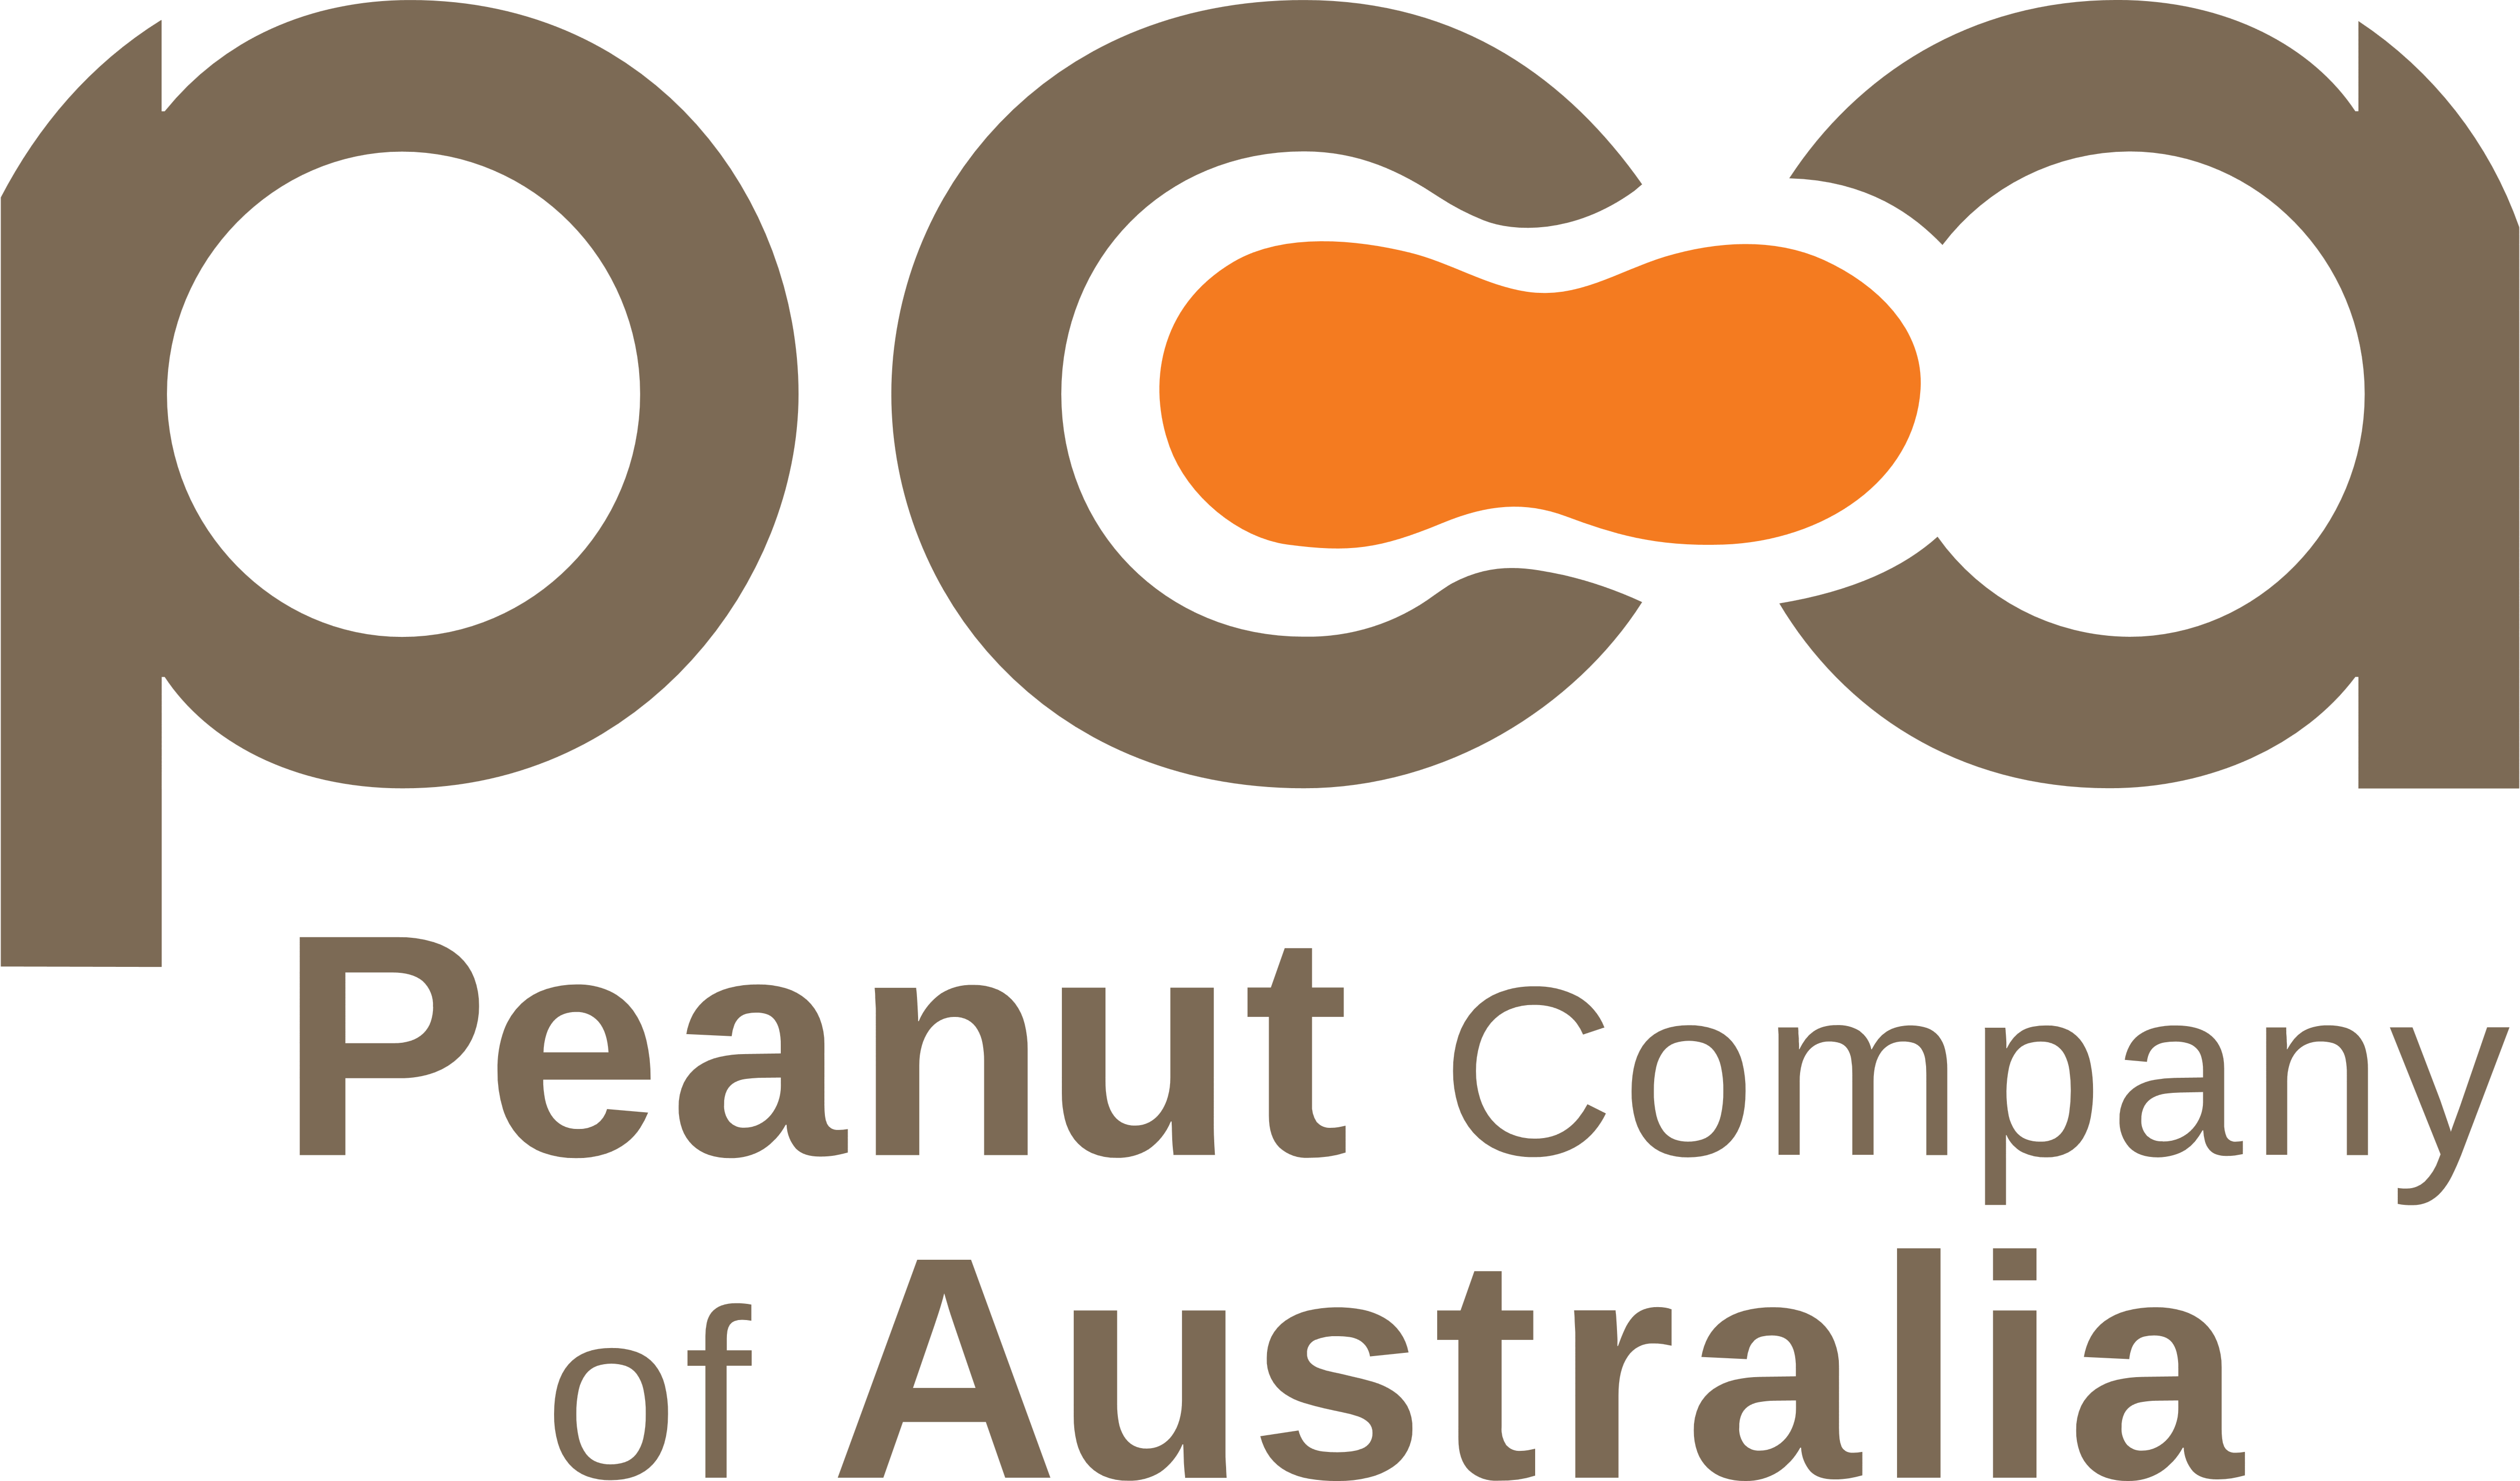 The Peanut Company of Australia – Logos Download4680 x 2751